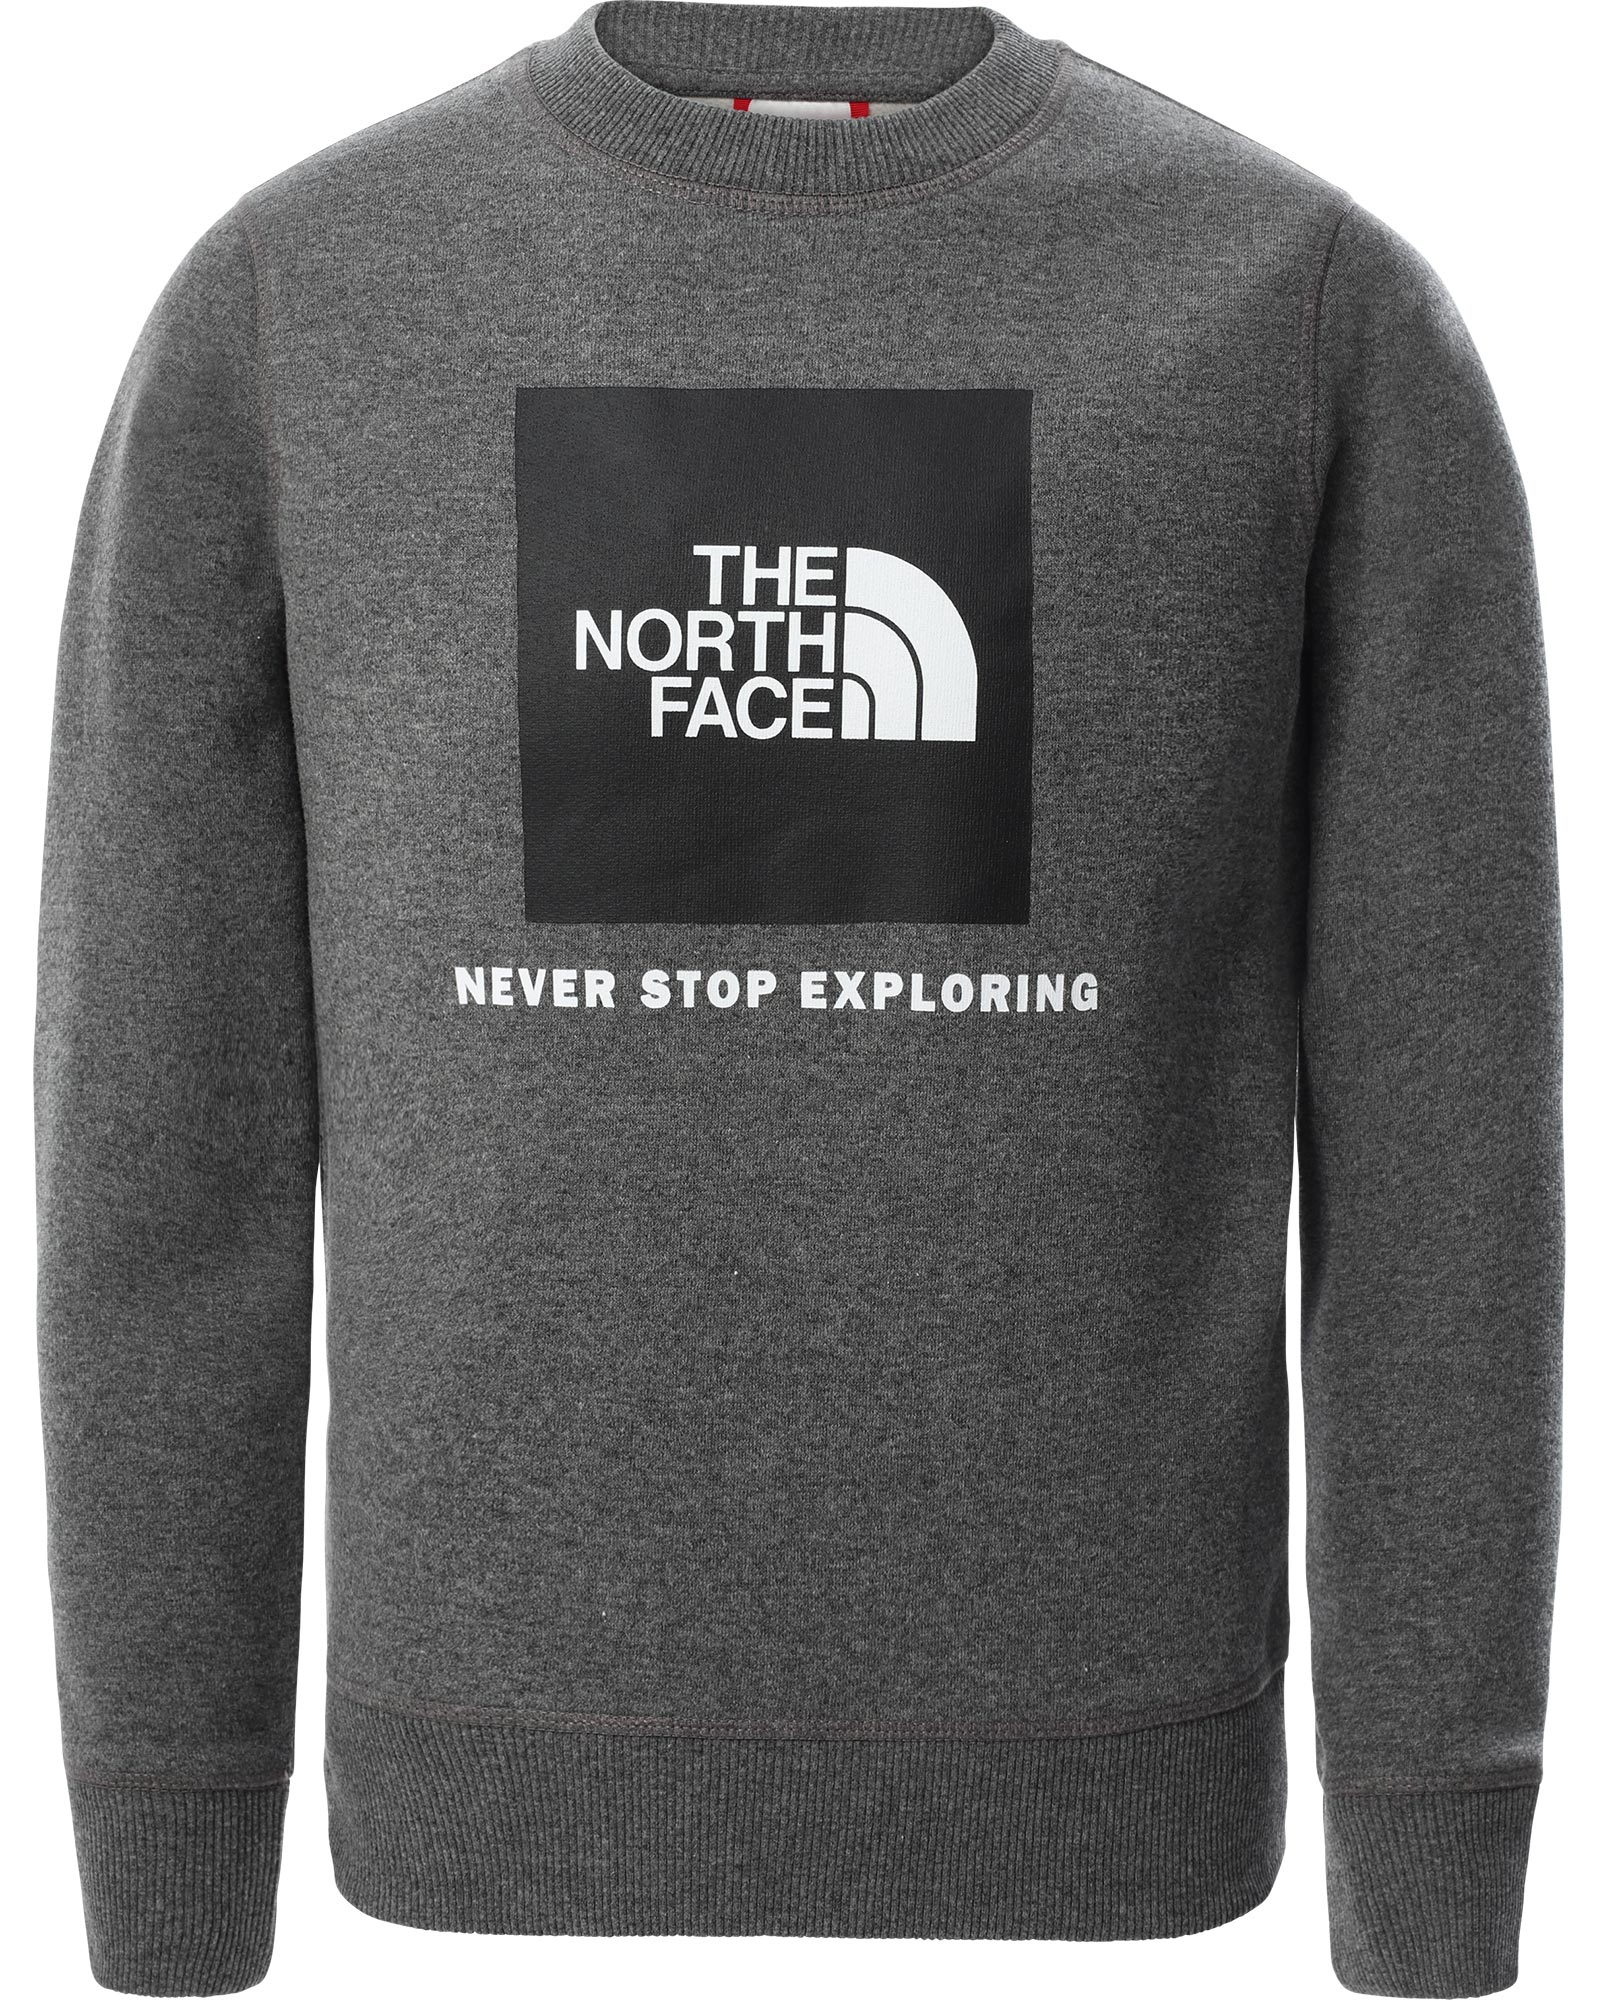 The North Face Box Drew Peak Kids’ Crew - TNF Medium Grey Heather M